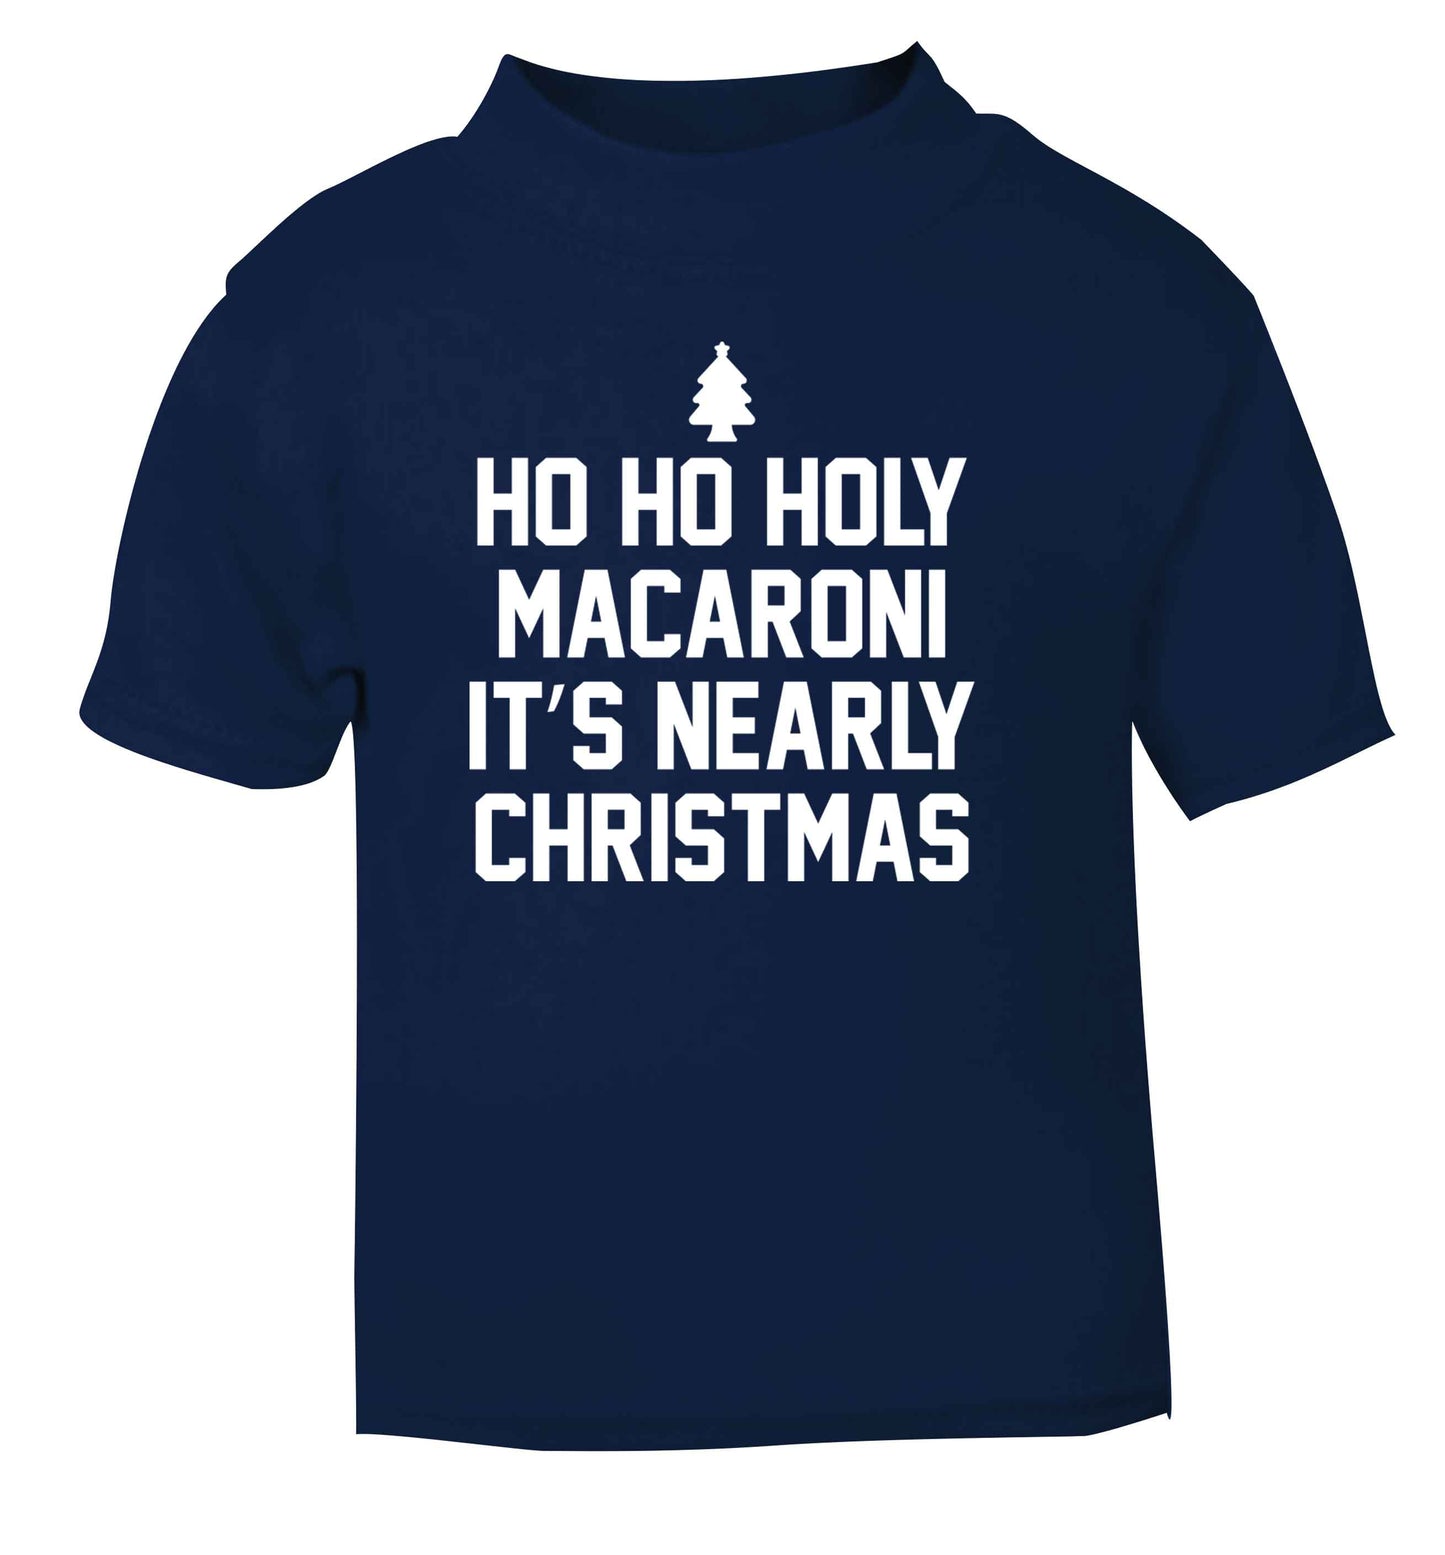 Ho ho holy macaroni it's nearly Christmas navy Baby Toddler Tshirt 2 Years